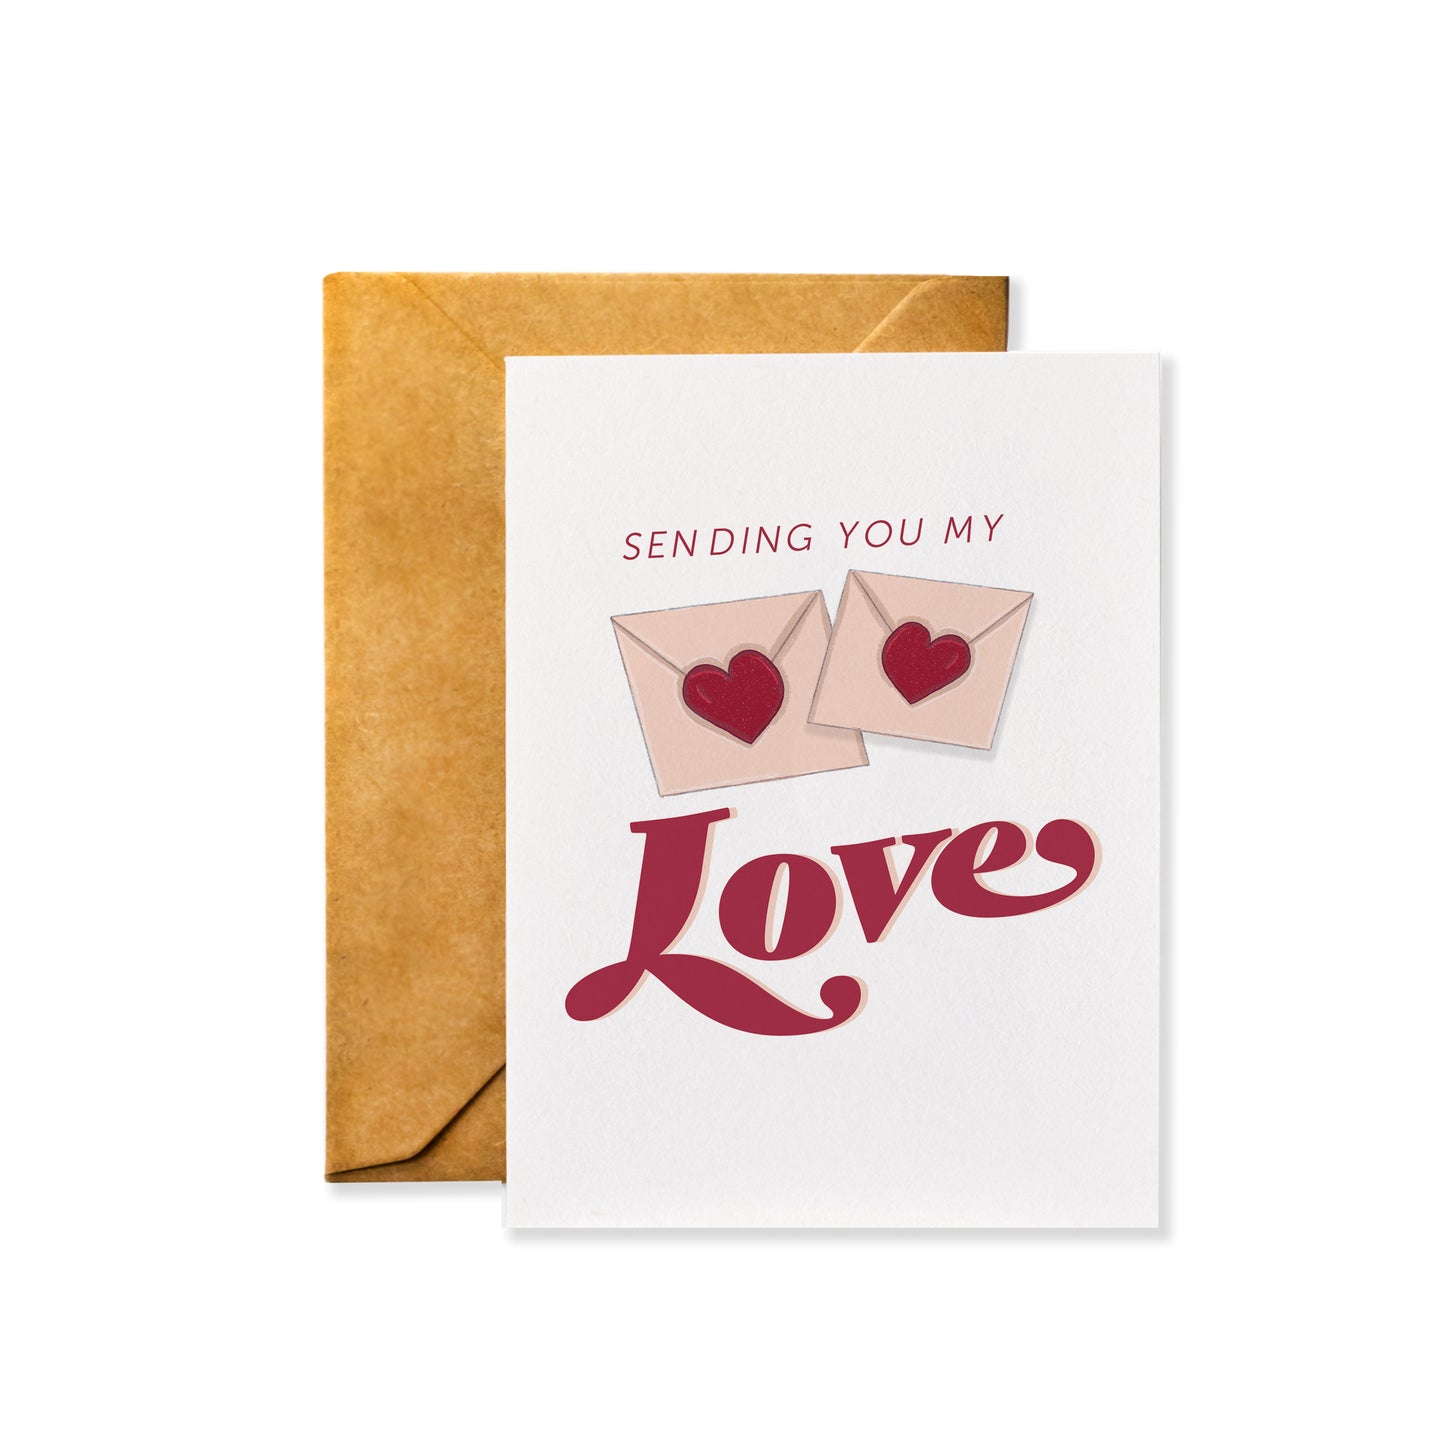 Sending You My Love - Greeting Card